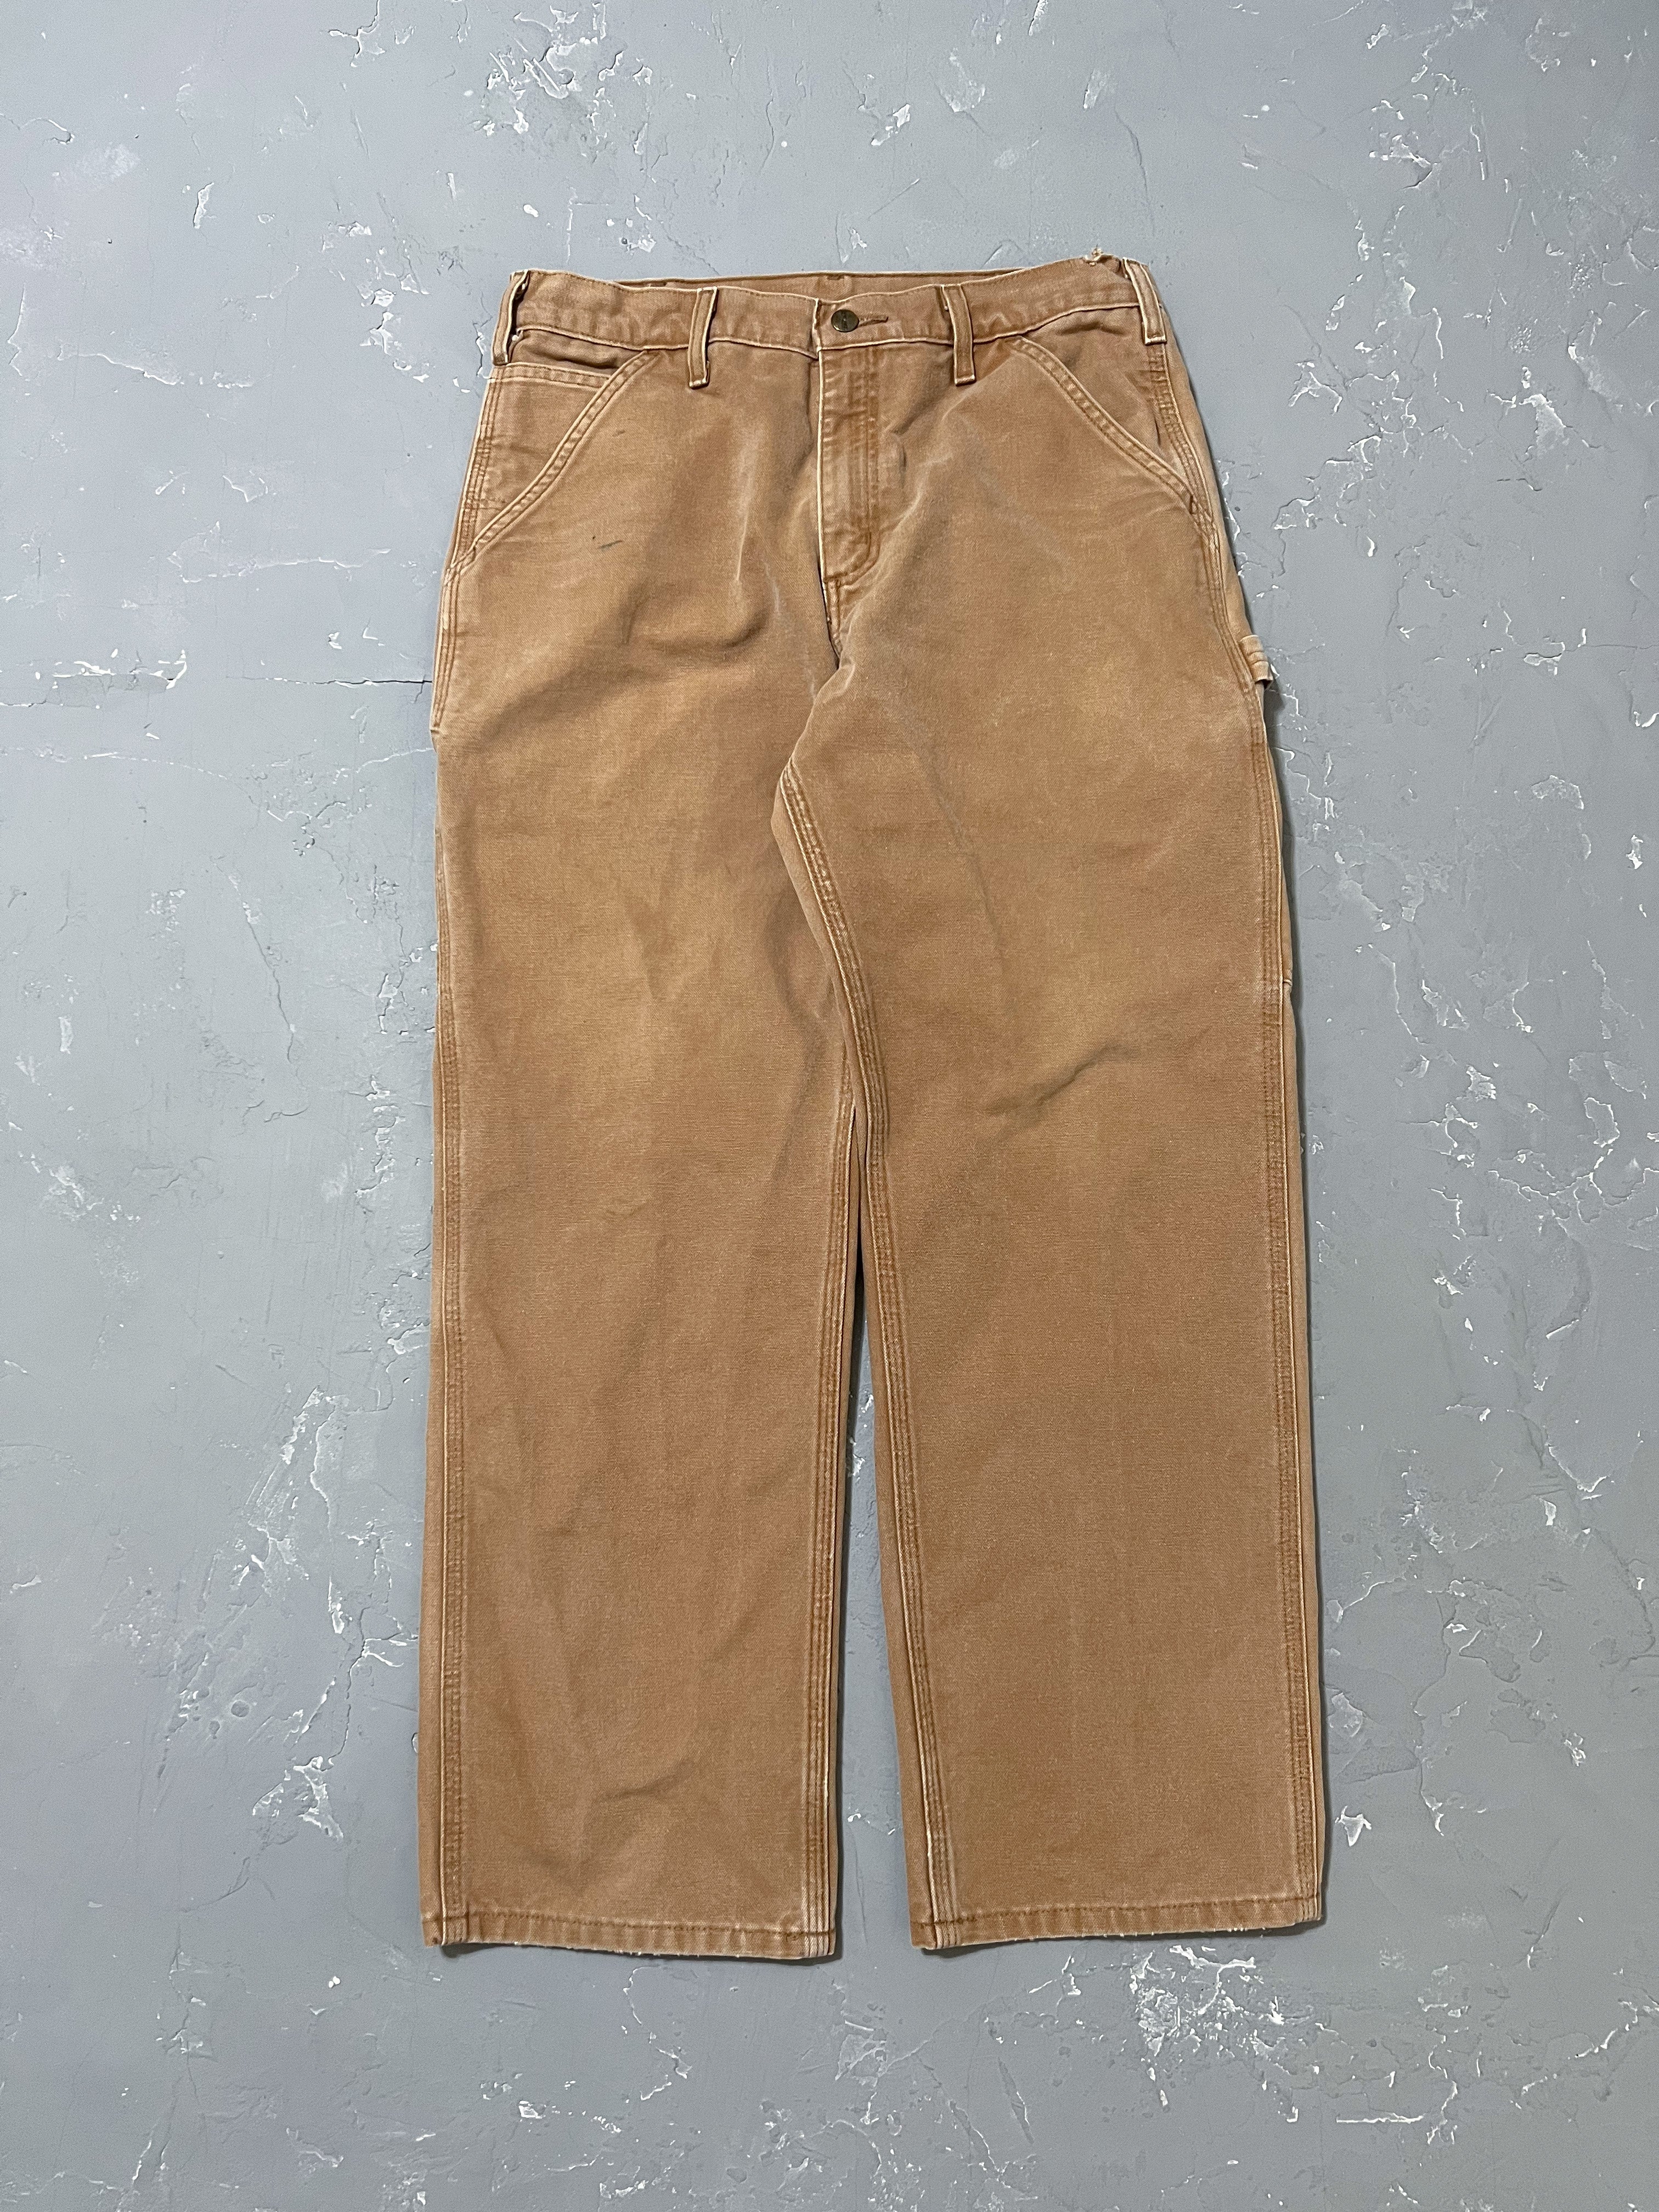 Carhartt Tan Carpenter Pants [32 x 30]